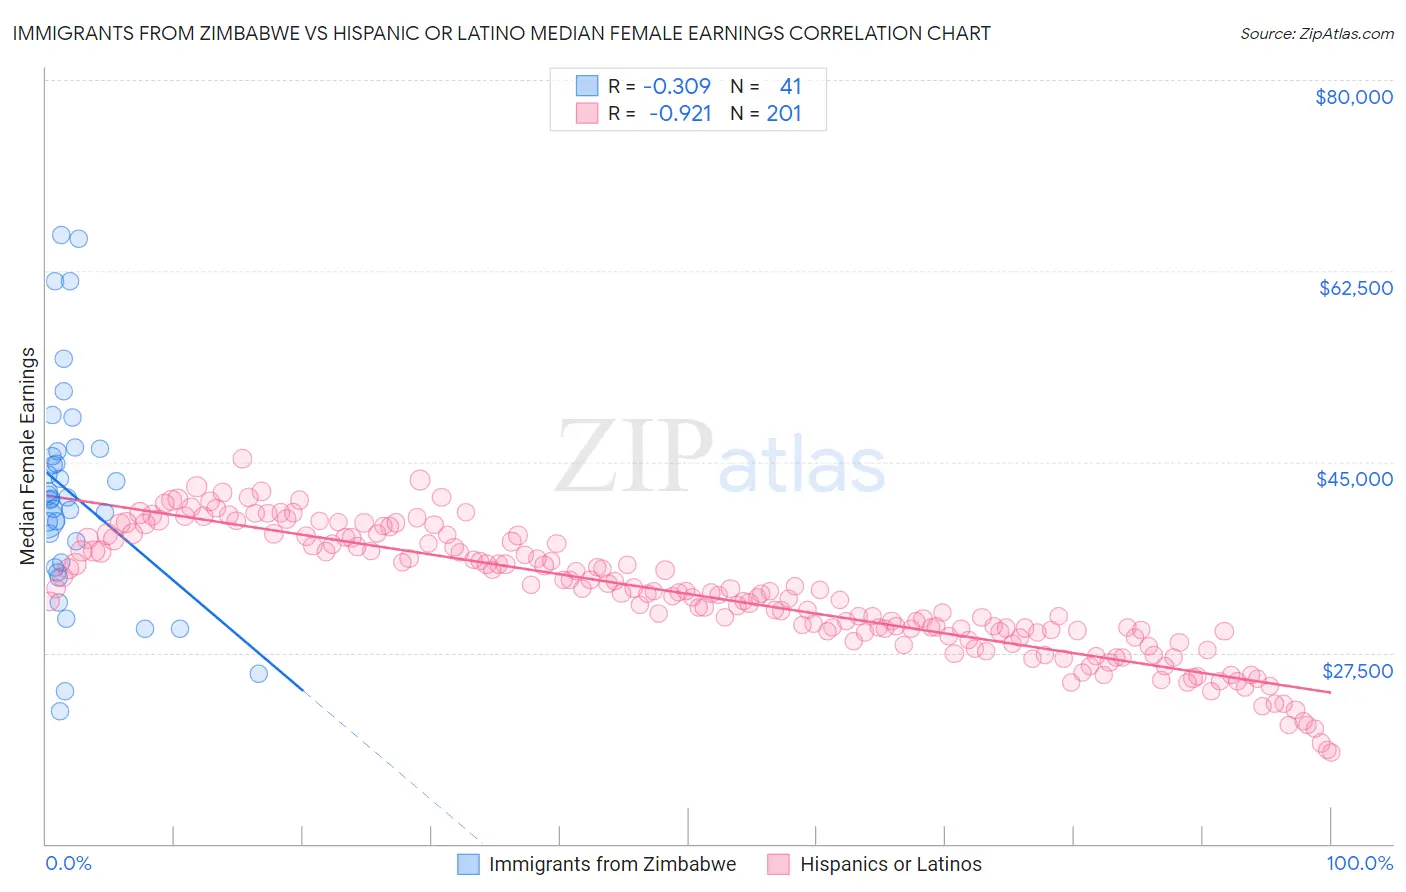 Immigrants from Zimbabwe vs Hispanic or Latino Median Female Earnings